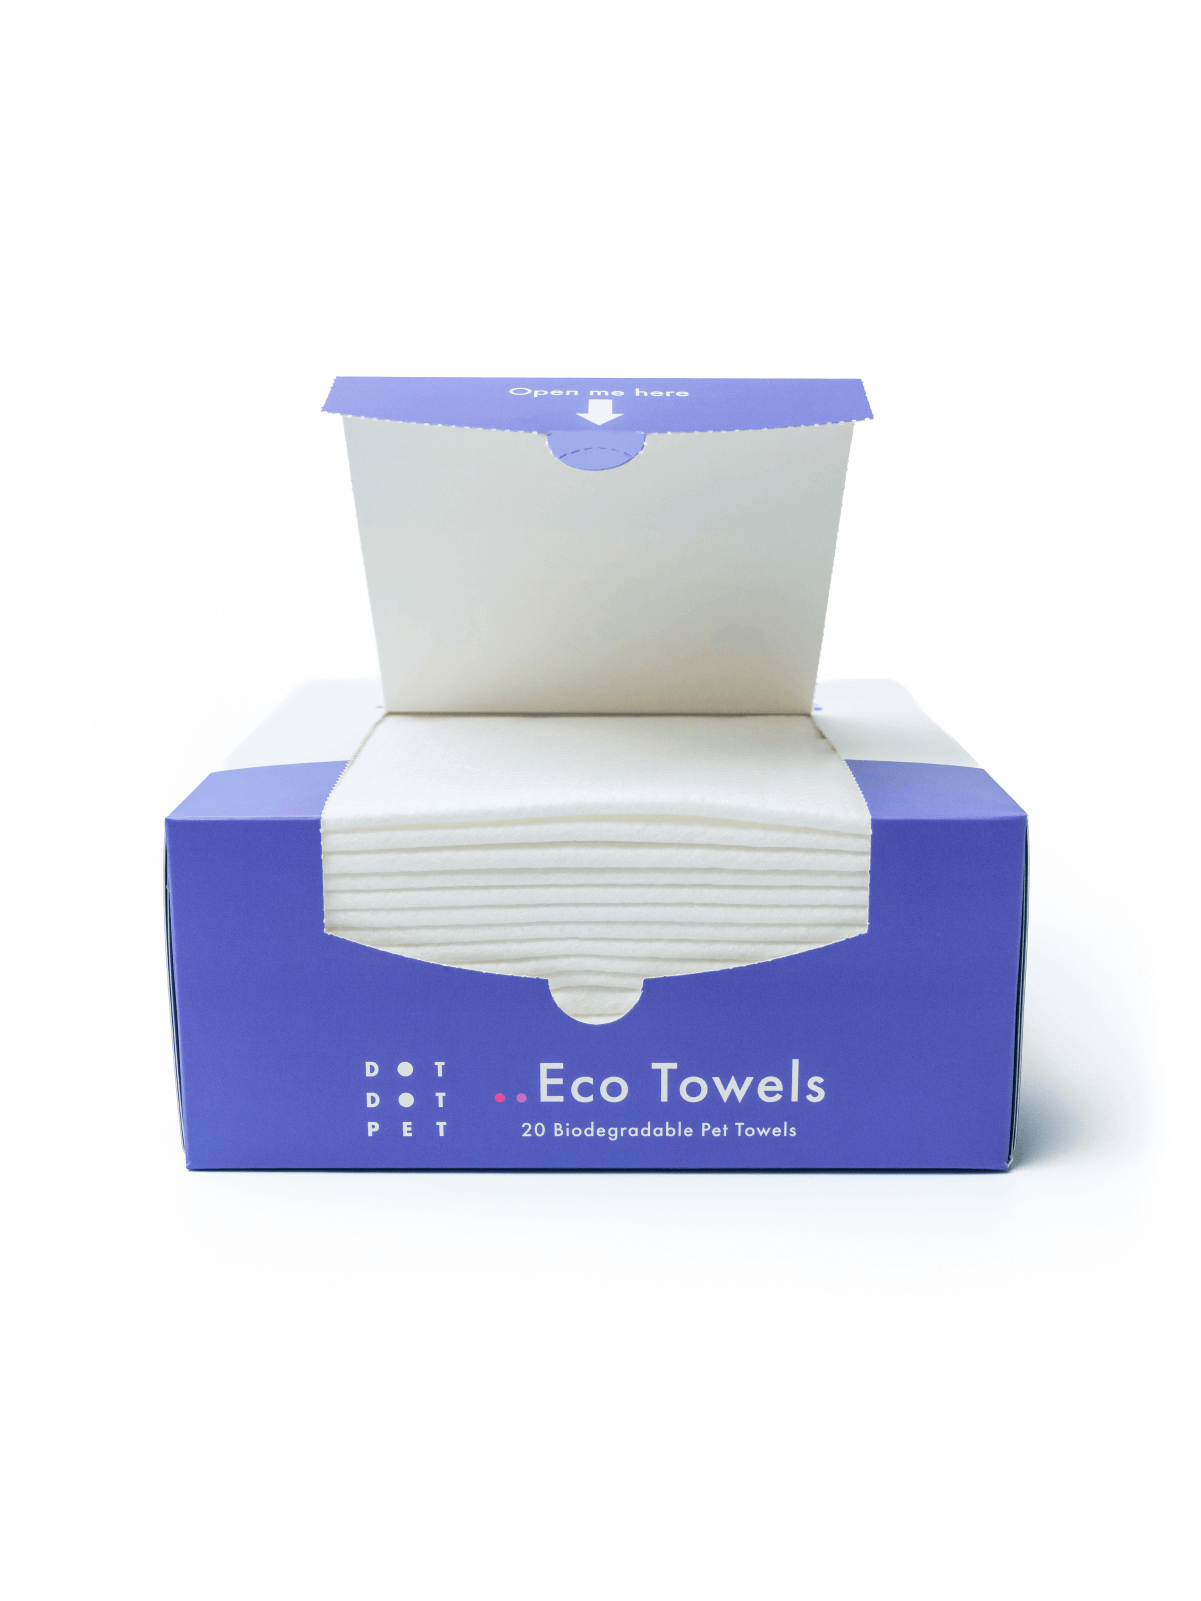 Dog Eco Towels box open showing 20 towels inside